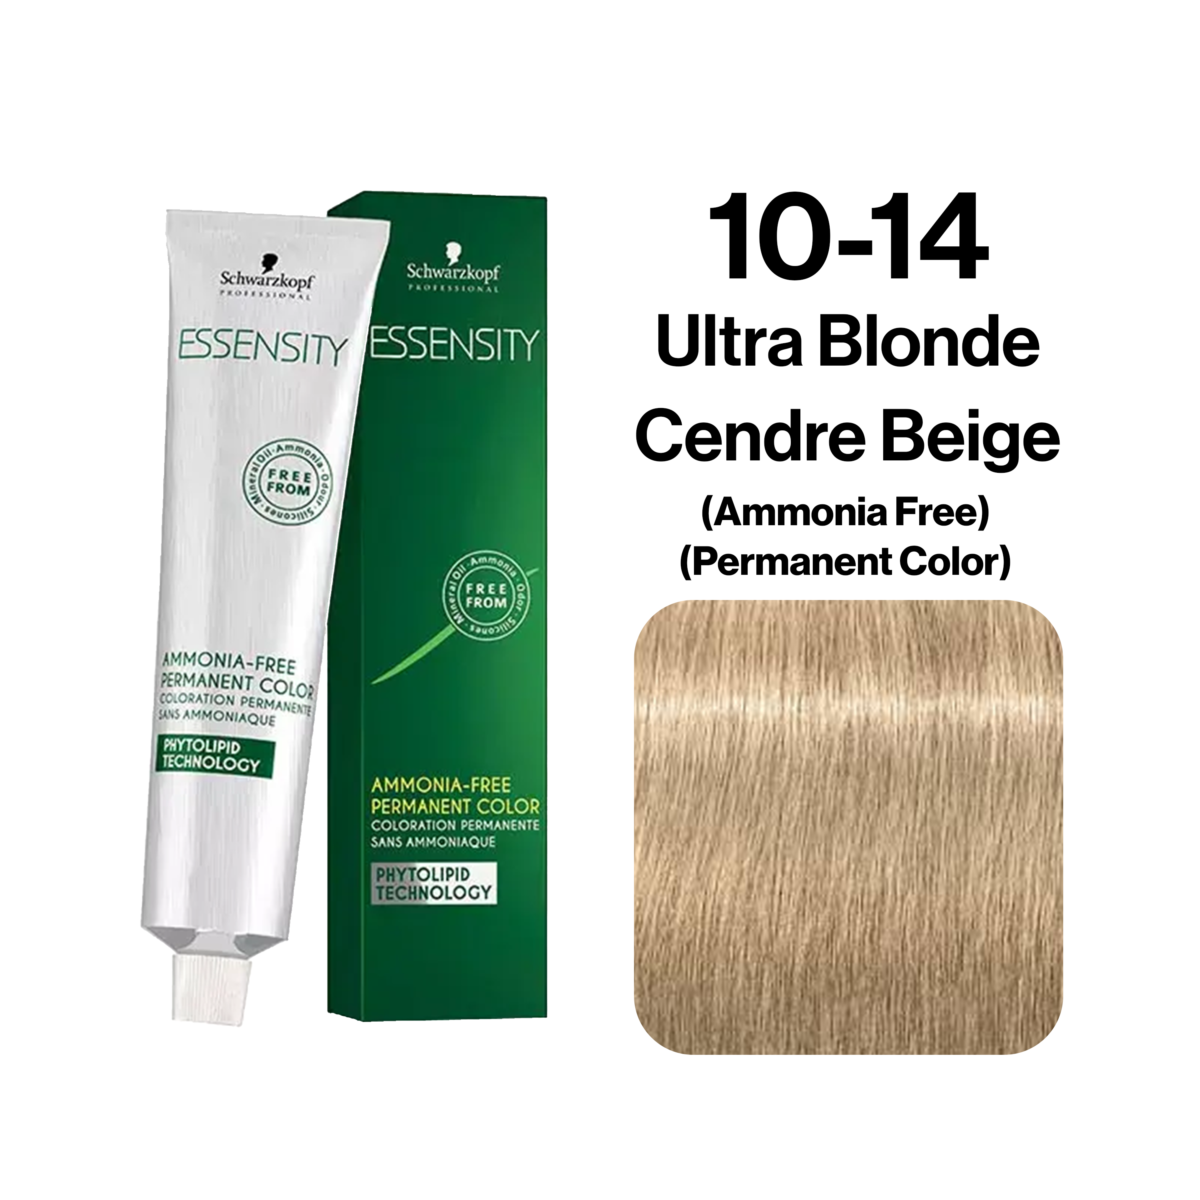 Schwarzkopf Essensity Ammonia Free Hair Color, 10-14 Ultra Blonde Cendre Beige 60ml